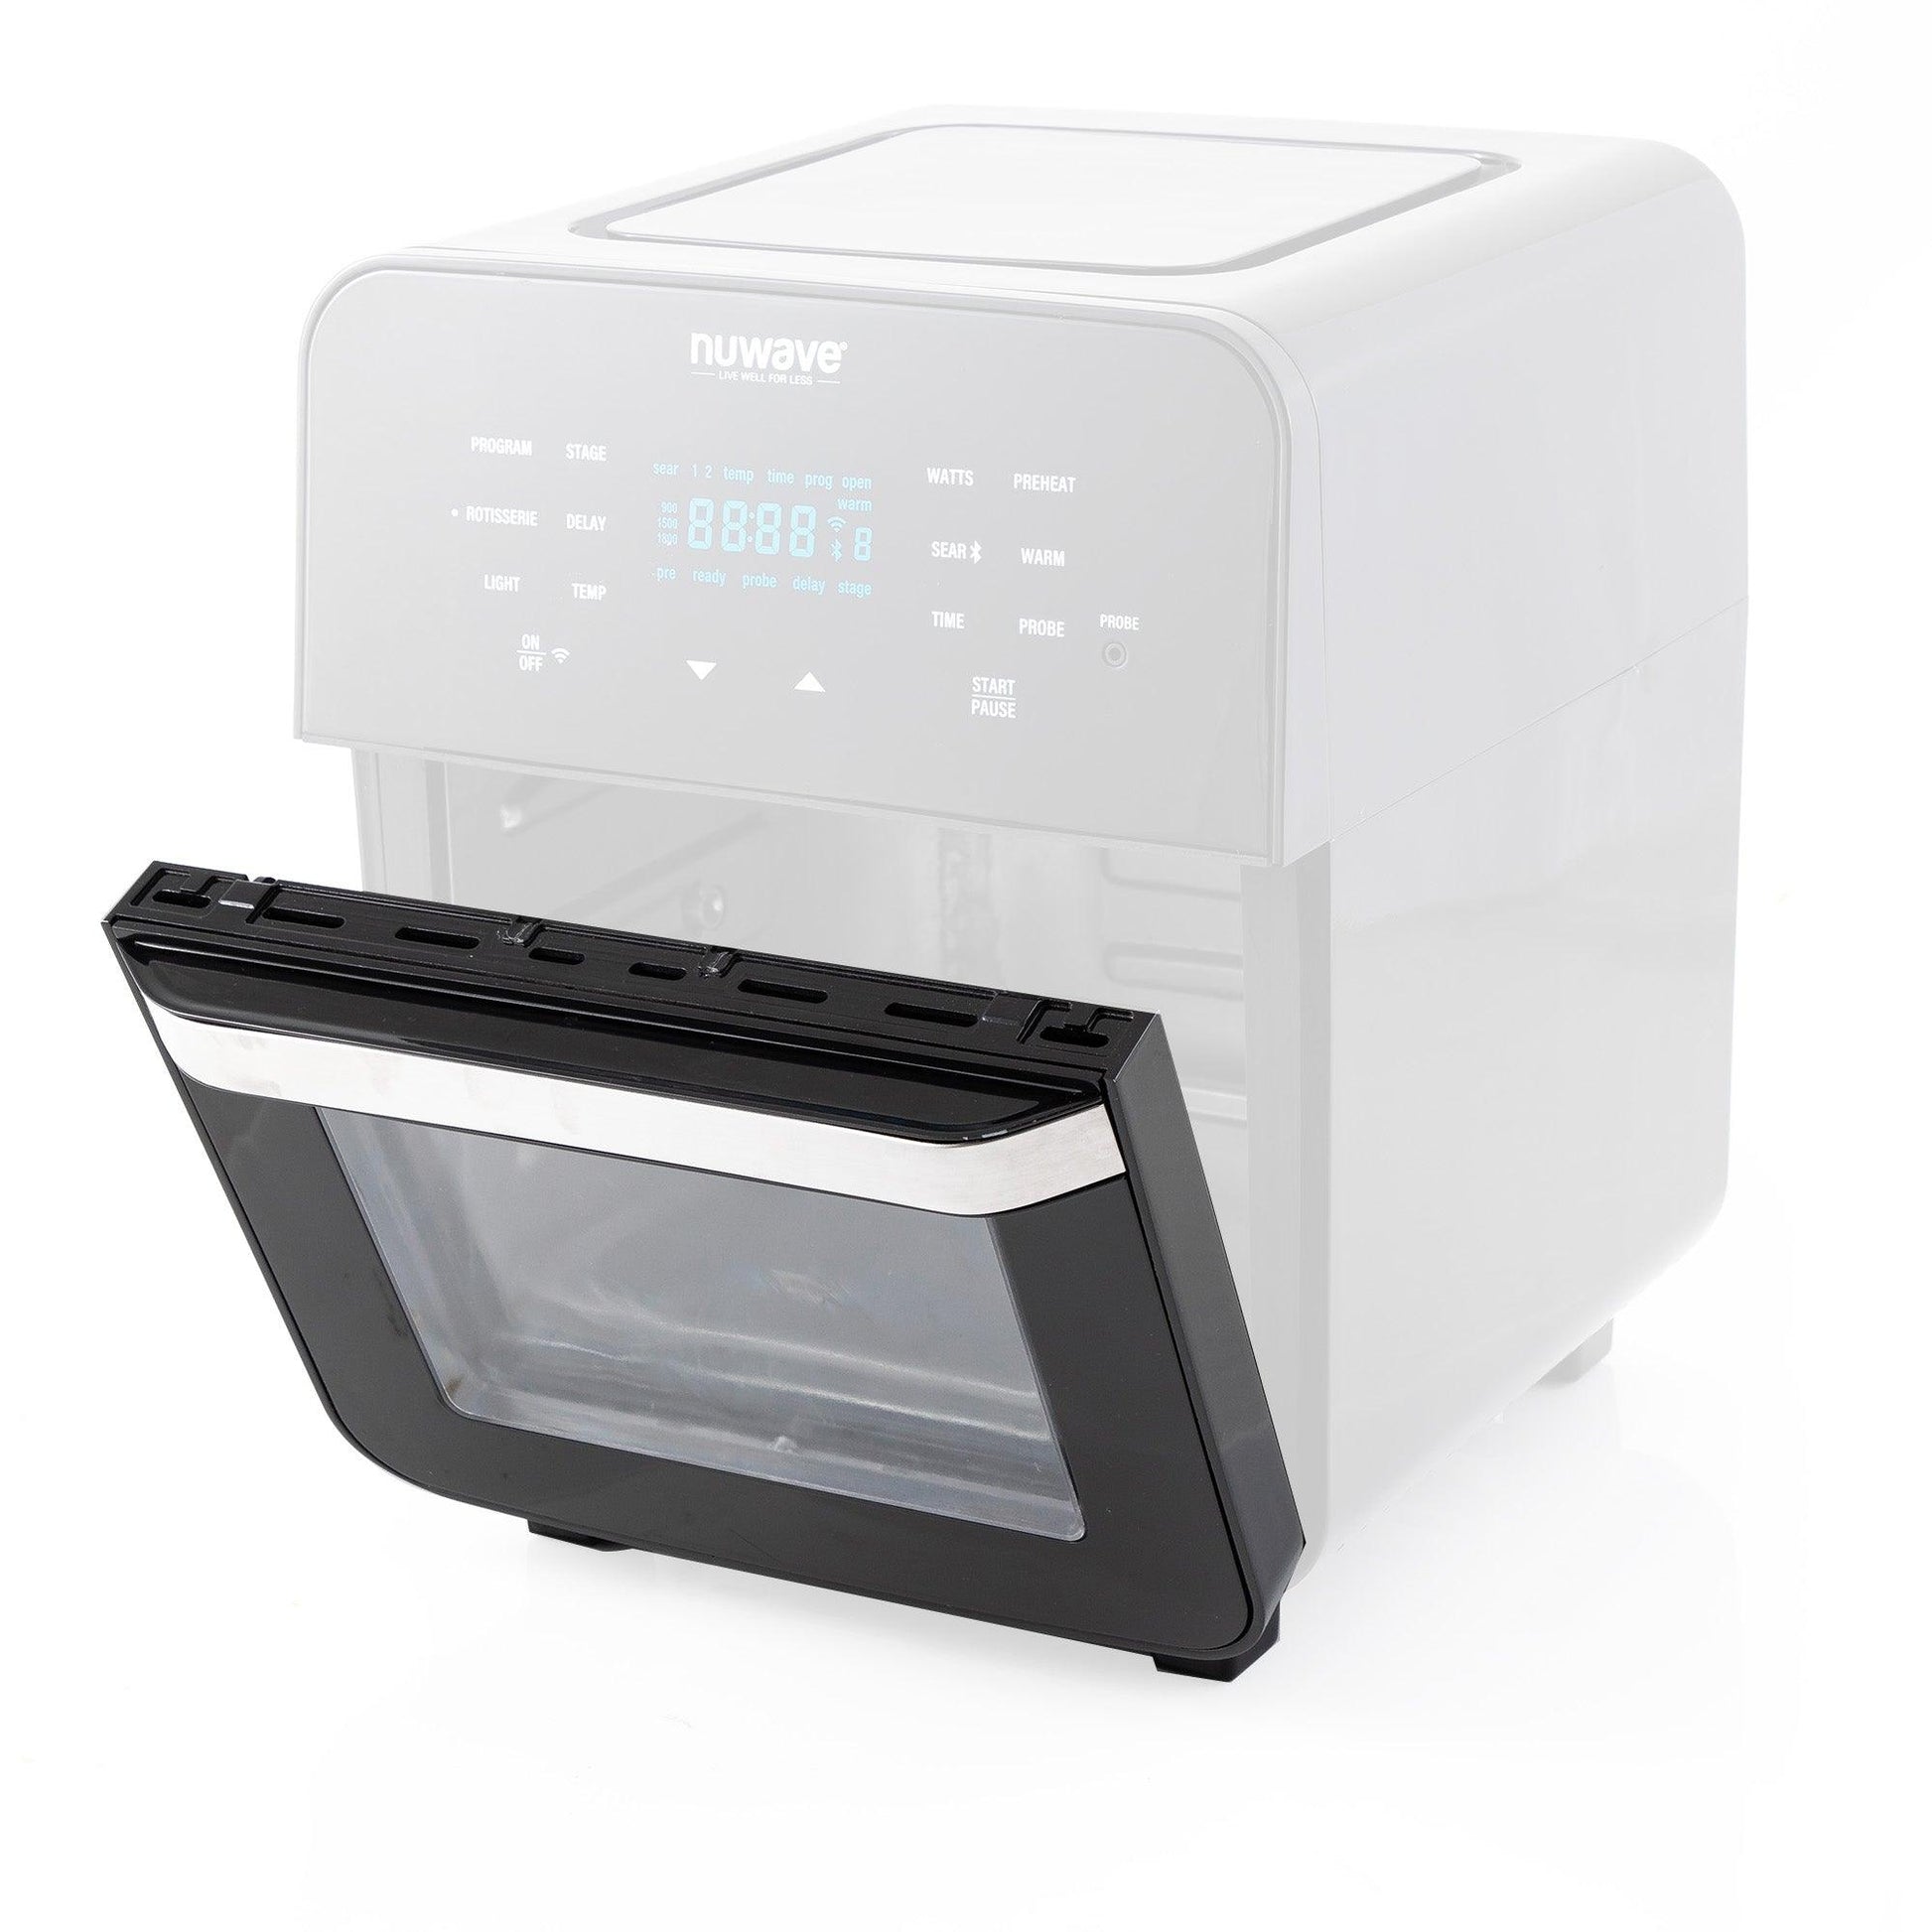 Nuwave Brio 15.5 QT Digital Air Fryer